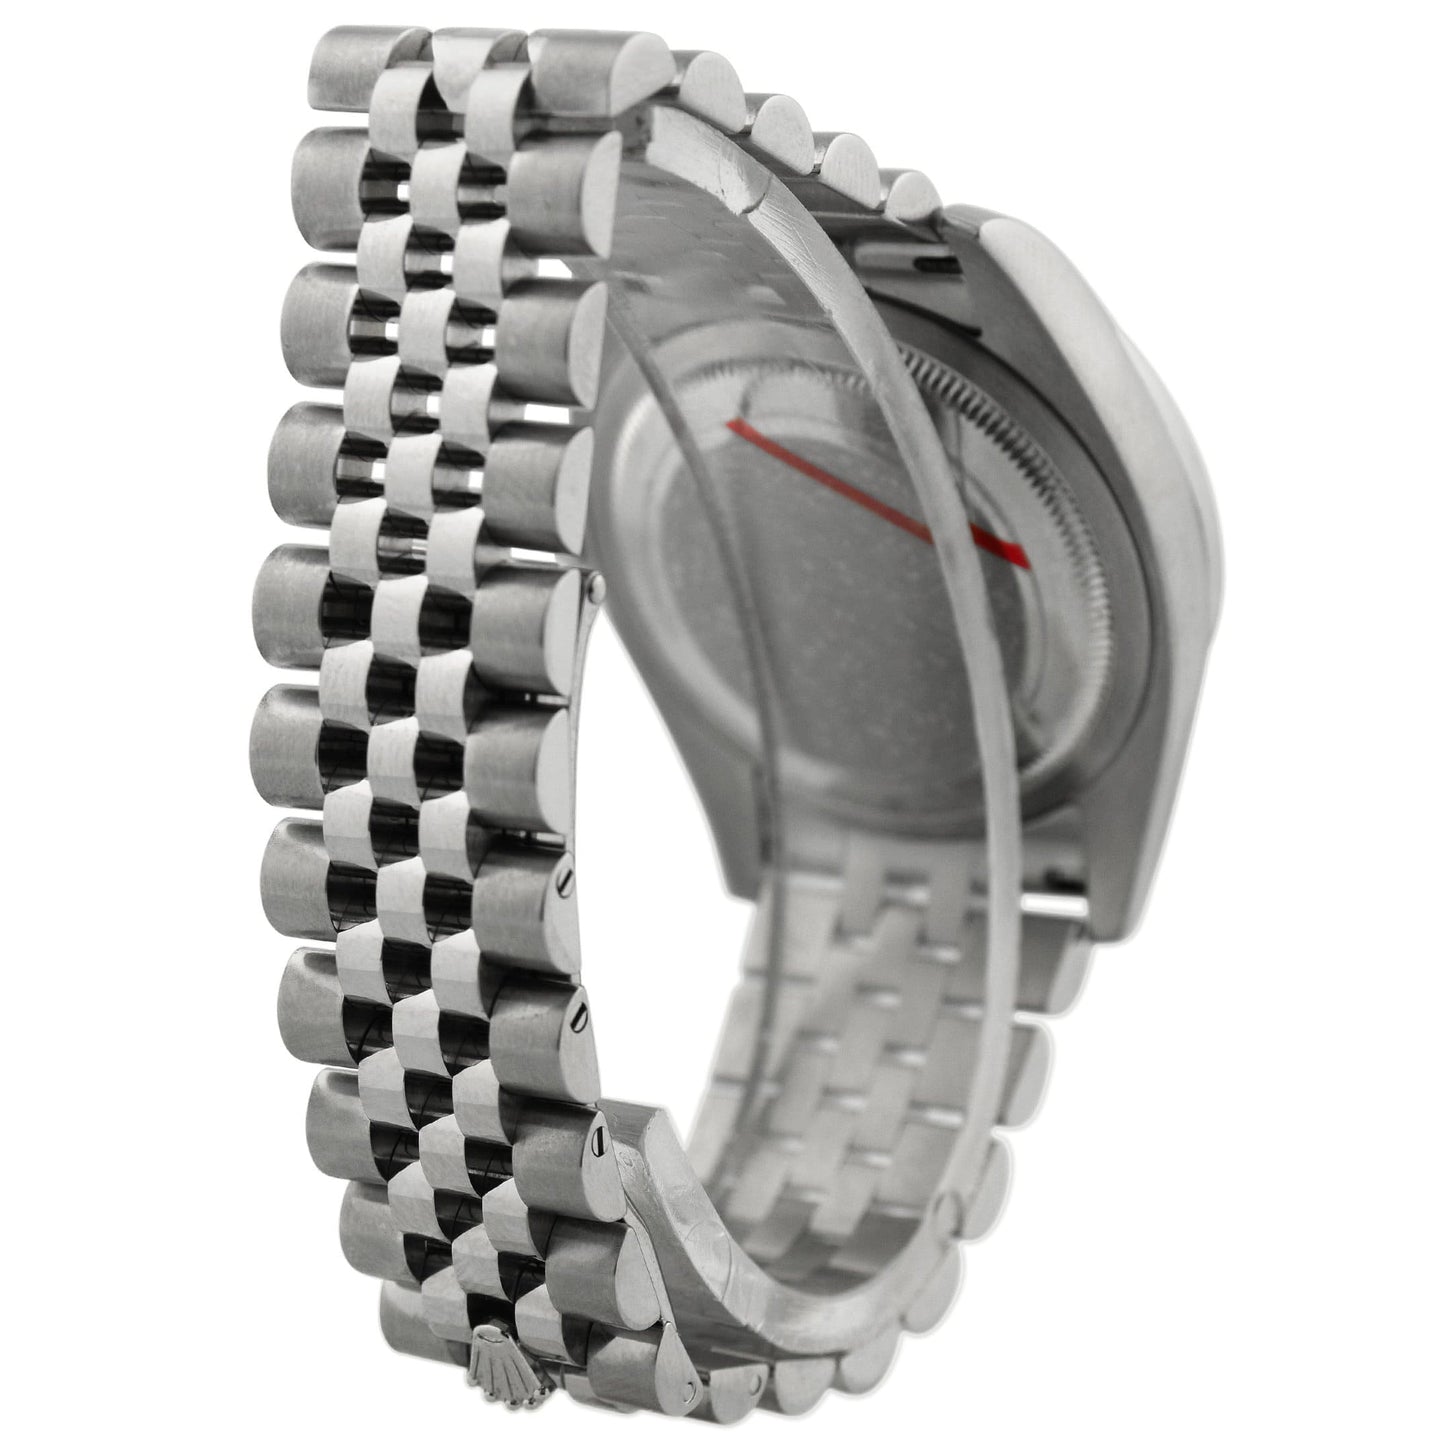 Rolex Datejust Stainless Steel 36mm White MOP Diamond Dial Watch Reference #: 116234 - Happy Jewelers Fine Jewelry Lifetime Warranty